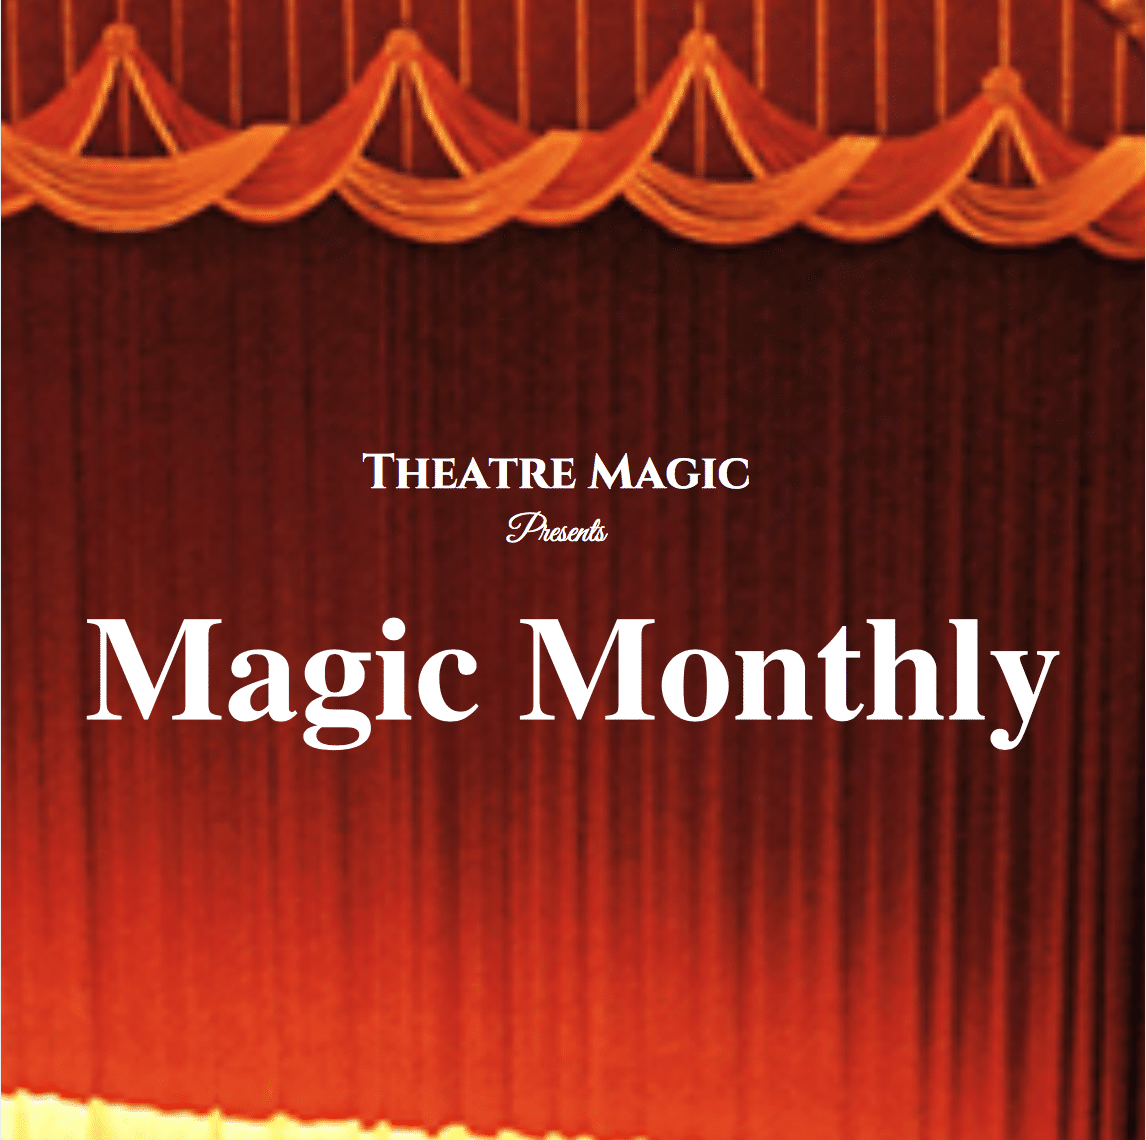 Magic Monthly - Theatre Magic - Learn Magic